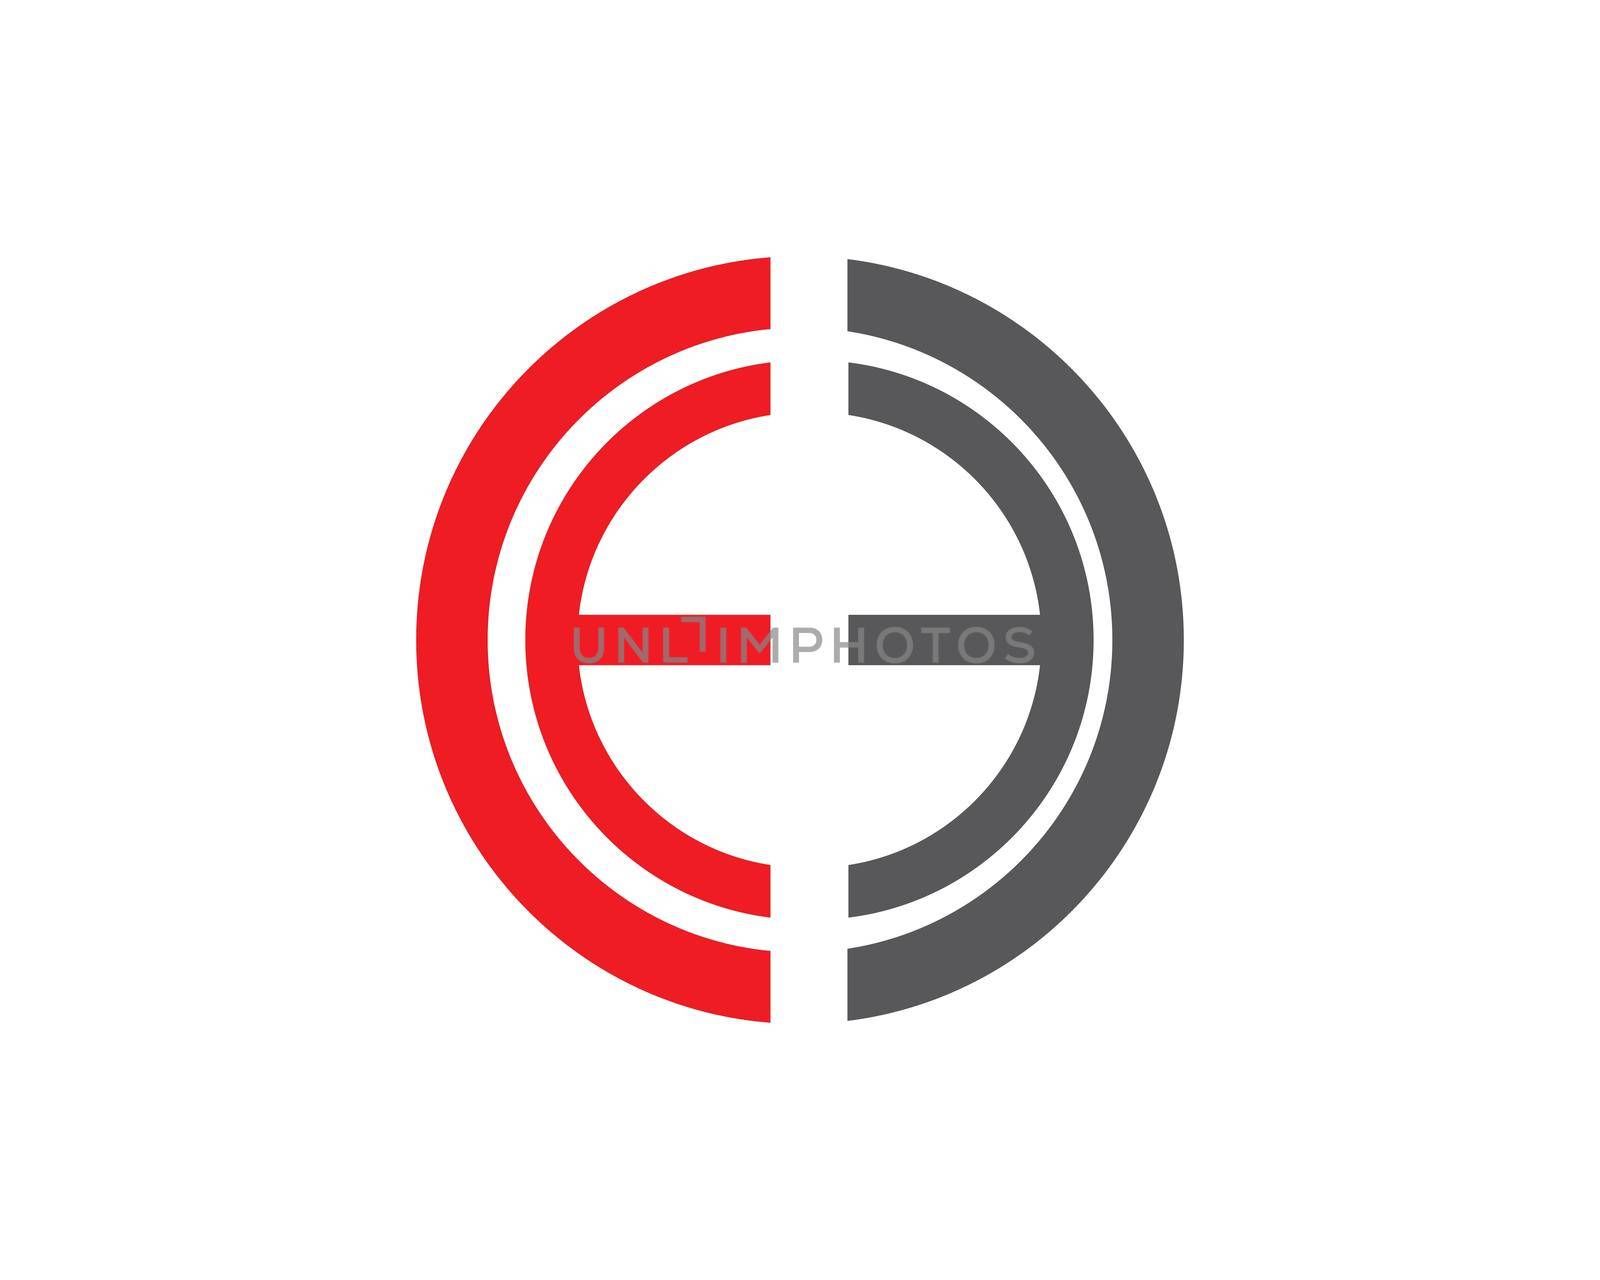 E Letter Logo Business Template Vector icon